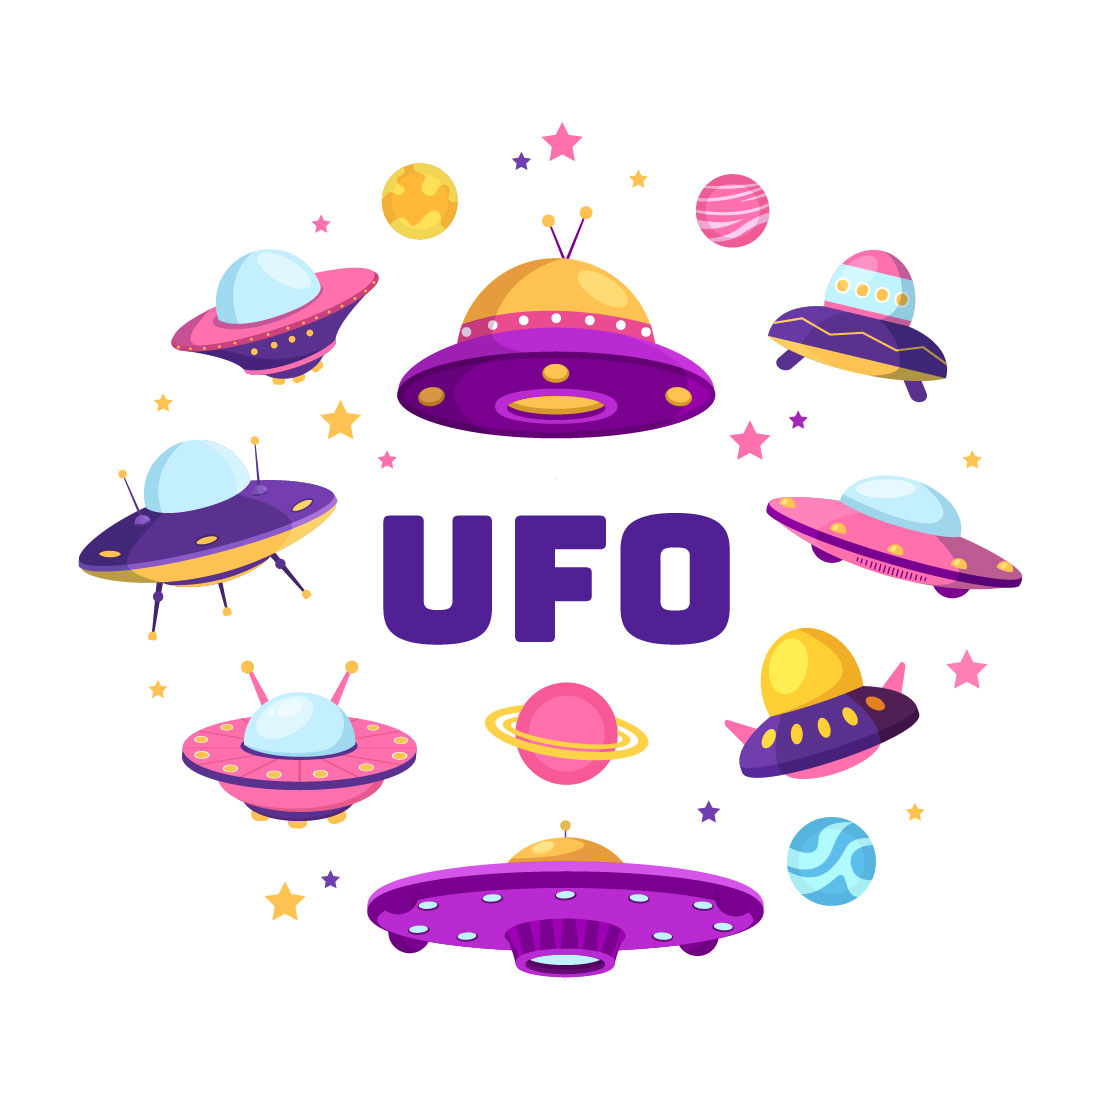 UFO Flying Spaceship Illustration cover image.